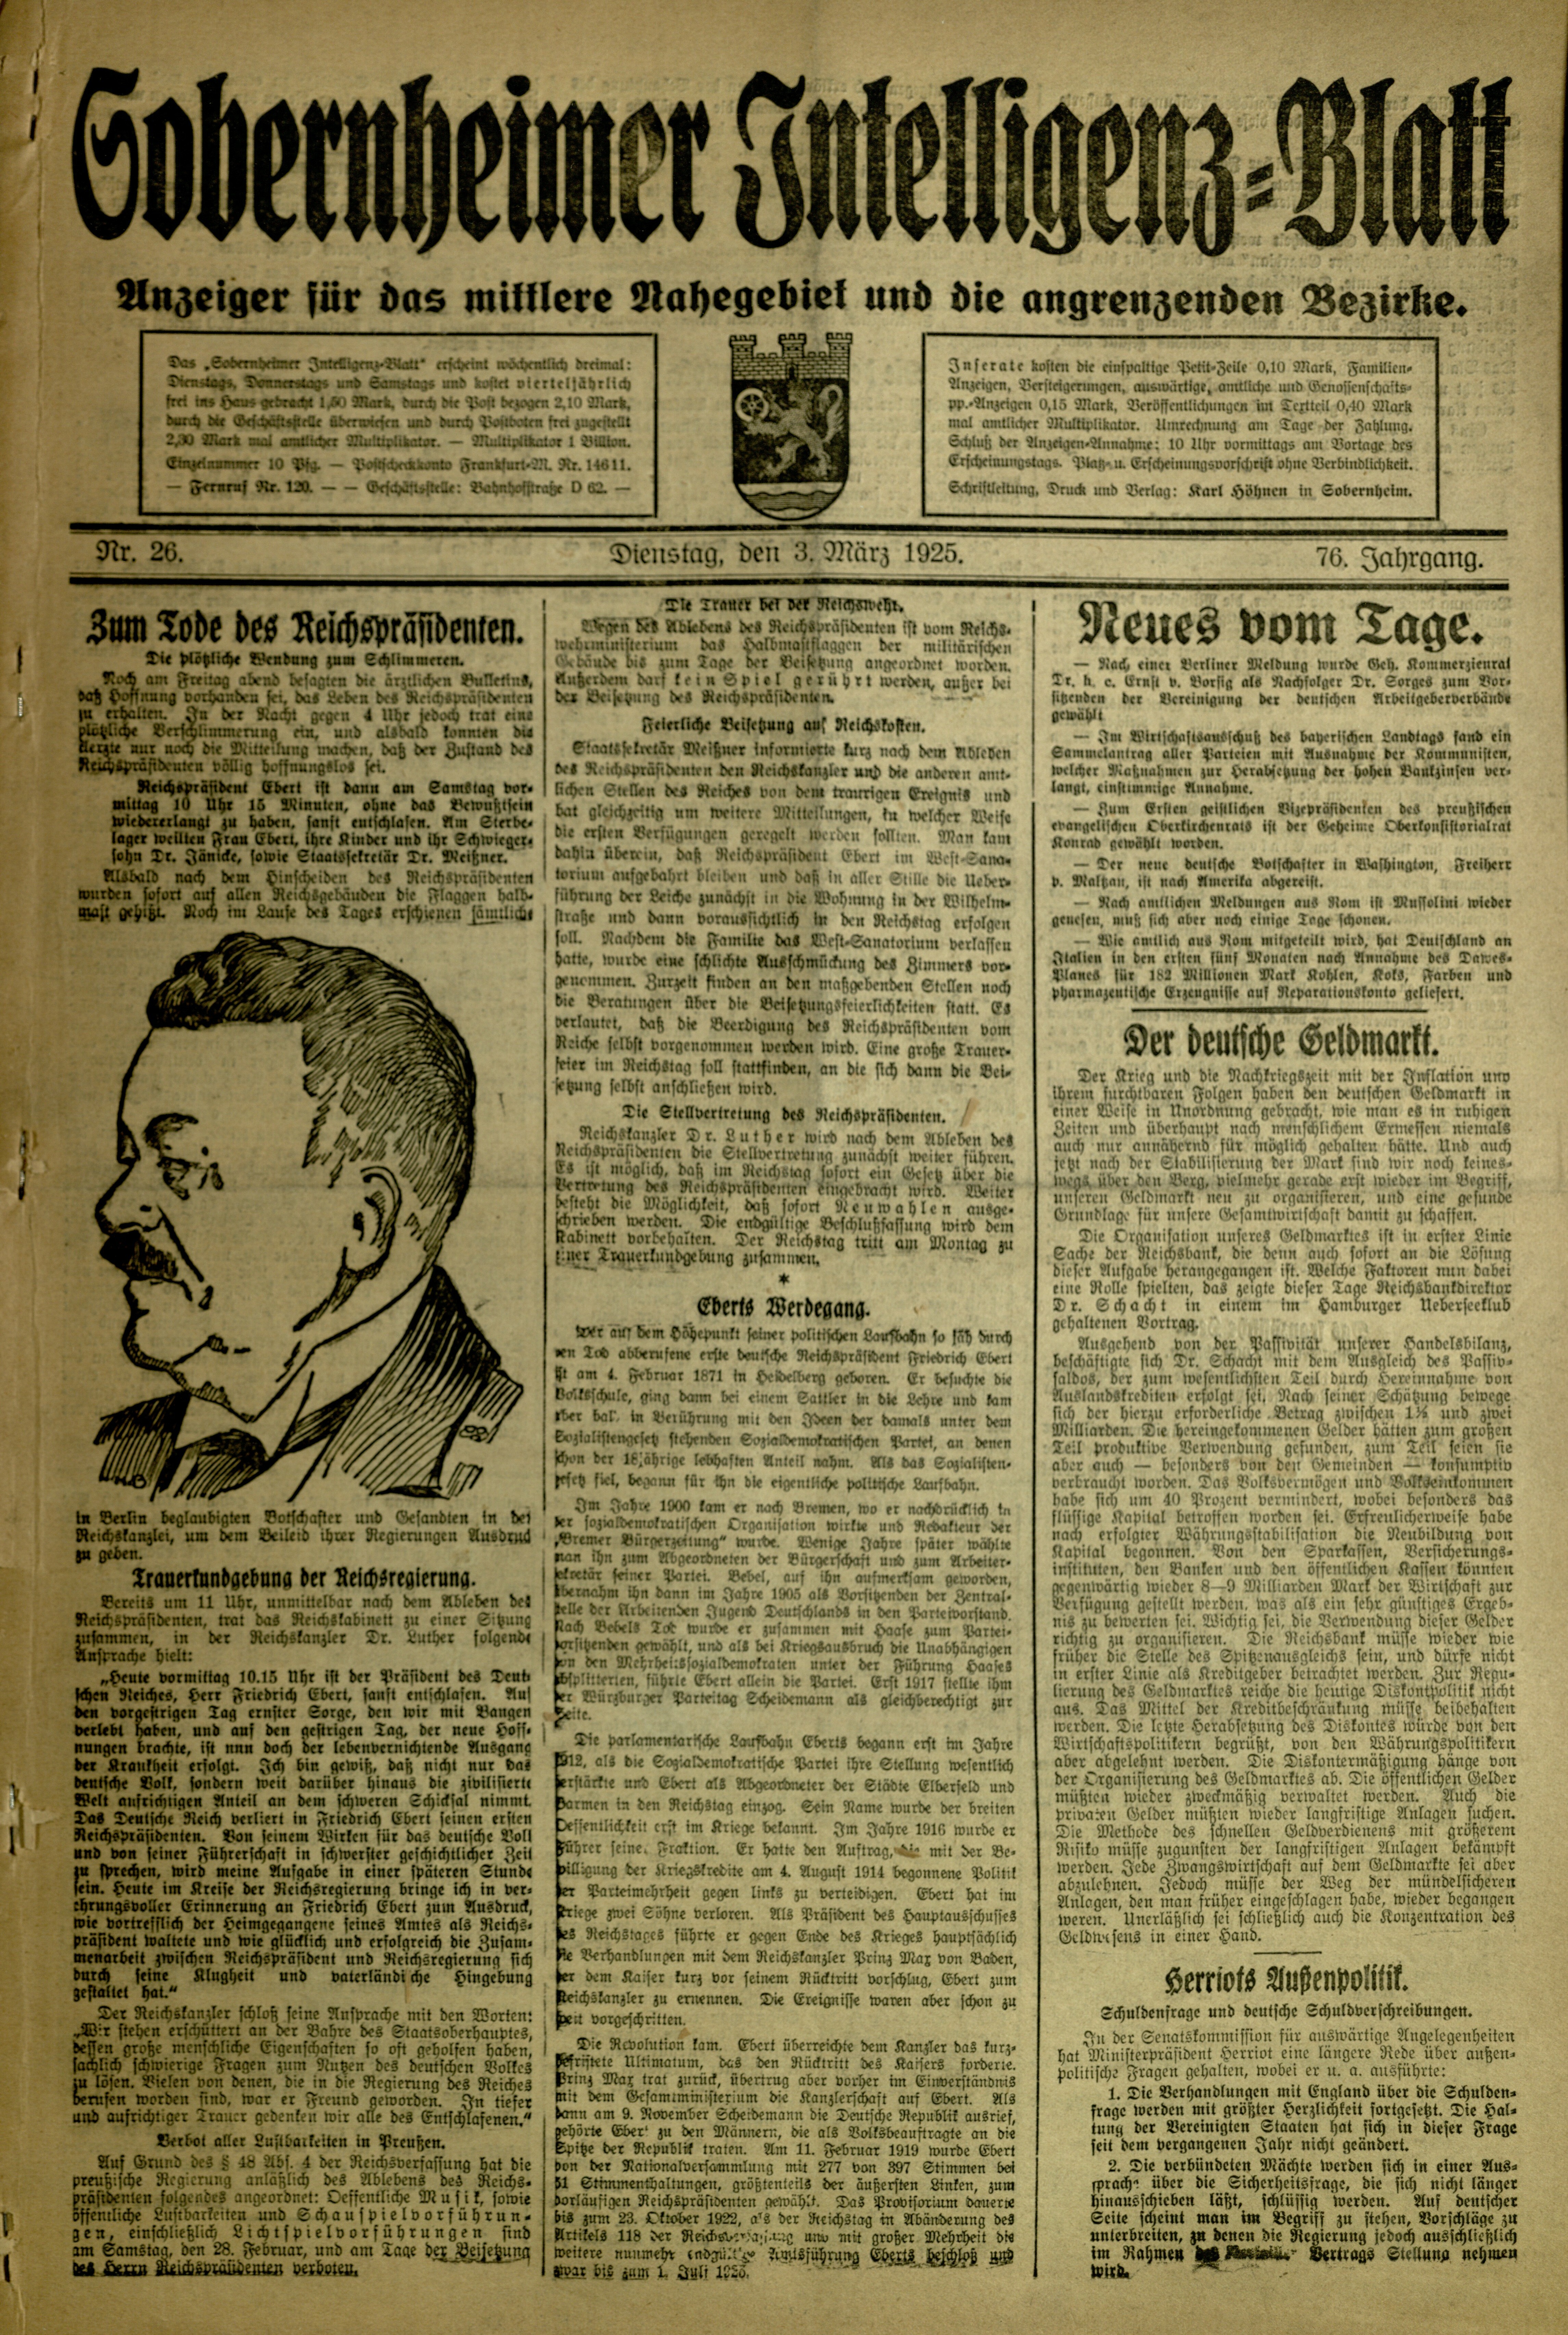 Zeitung: Sobernheimer Intelligenzblatt; März 1925, Jg. 73 Nr. 26 (Heimatmuseum Bad Sobernheim CC BY-NC-SA)